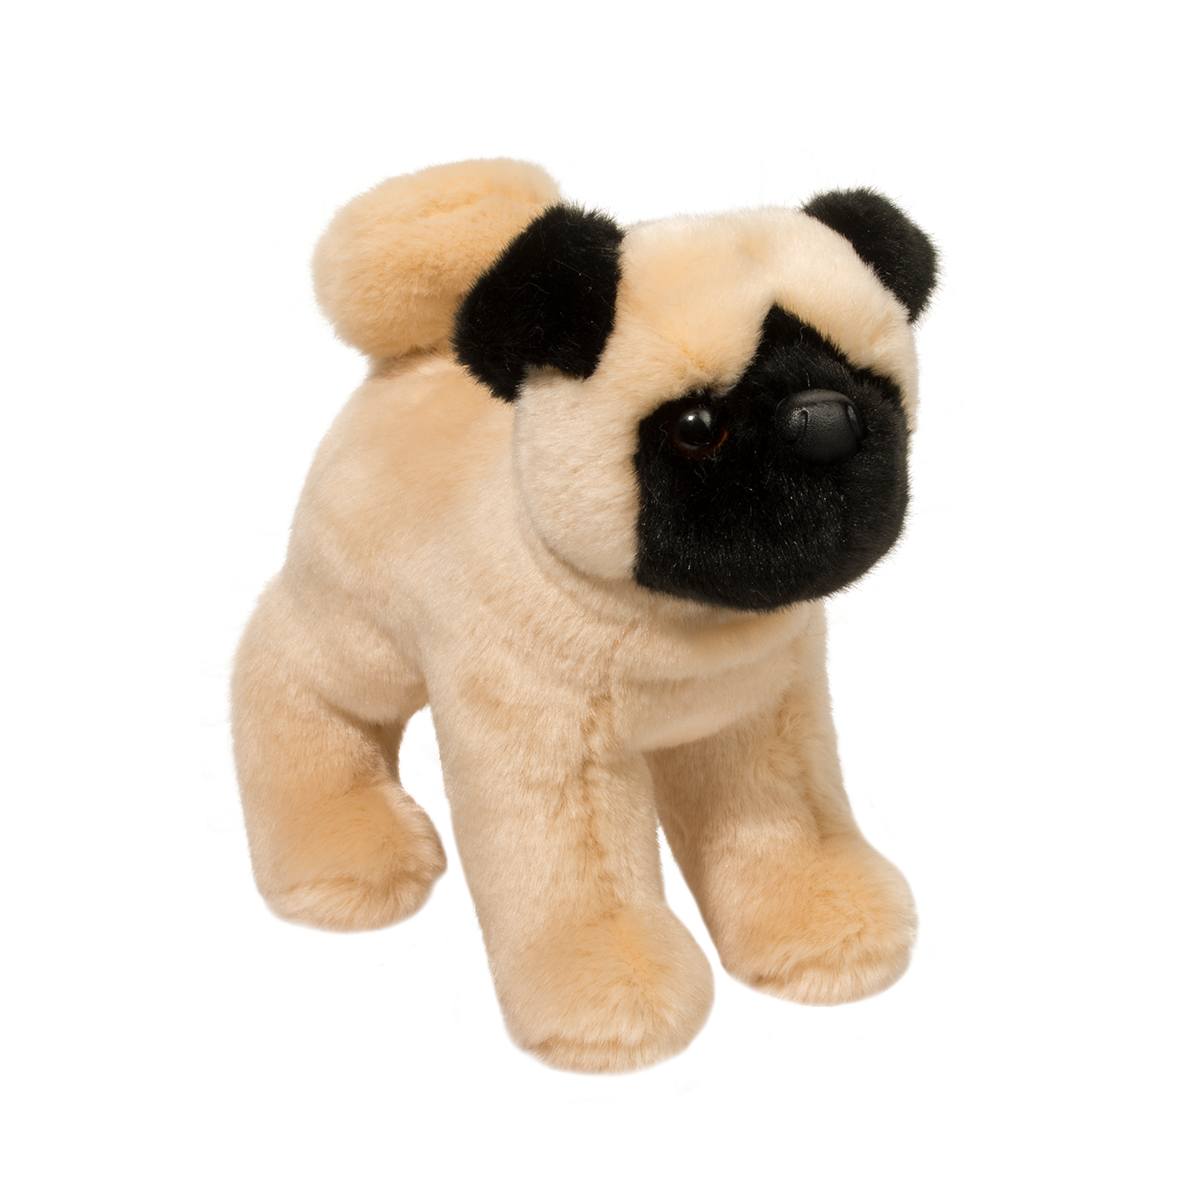 Douglas Cuddle Toys #3985 HAMILTON the Plush PUG Puppy Dog Stuffed Animal 